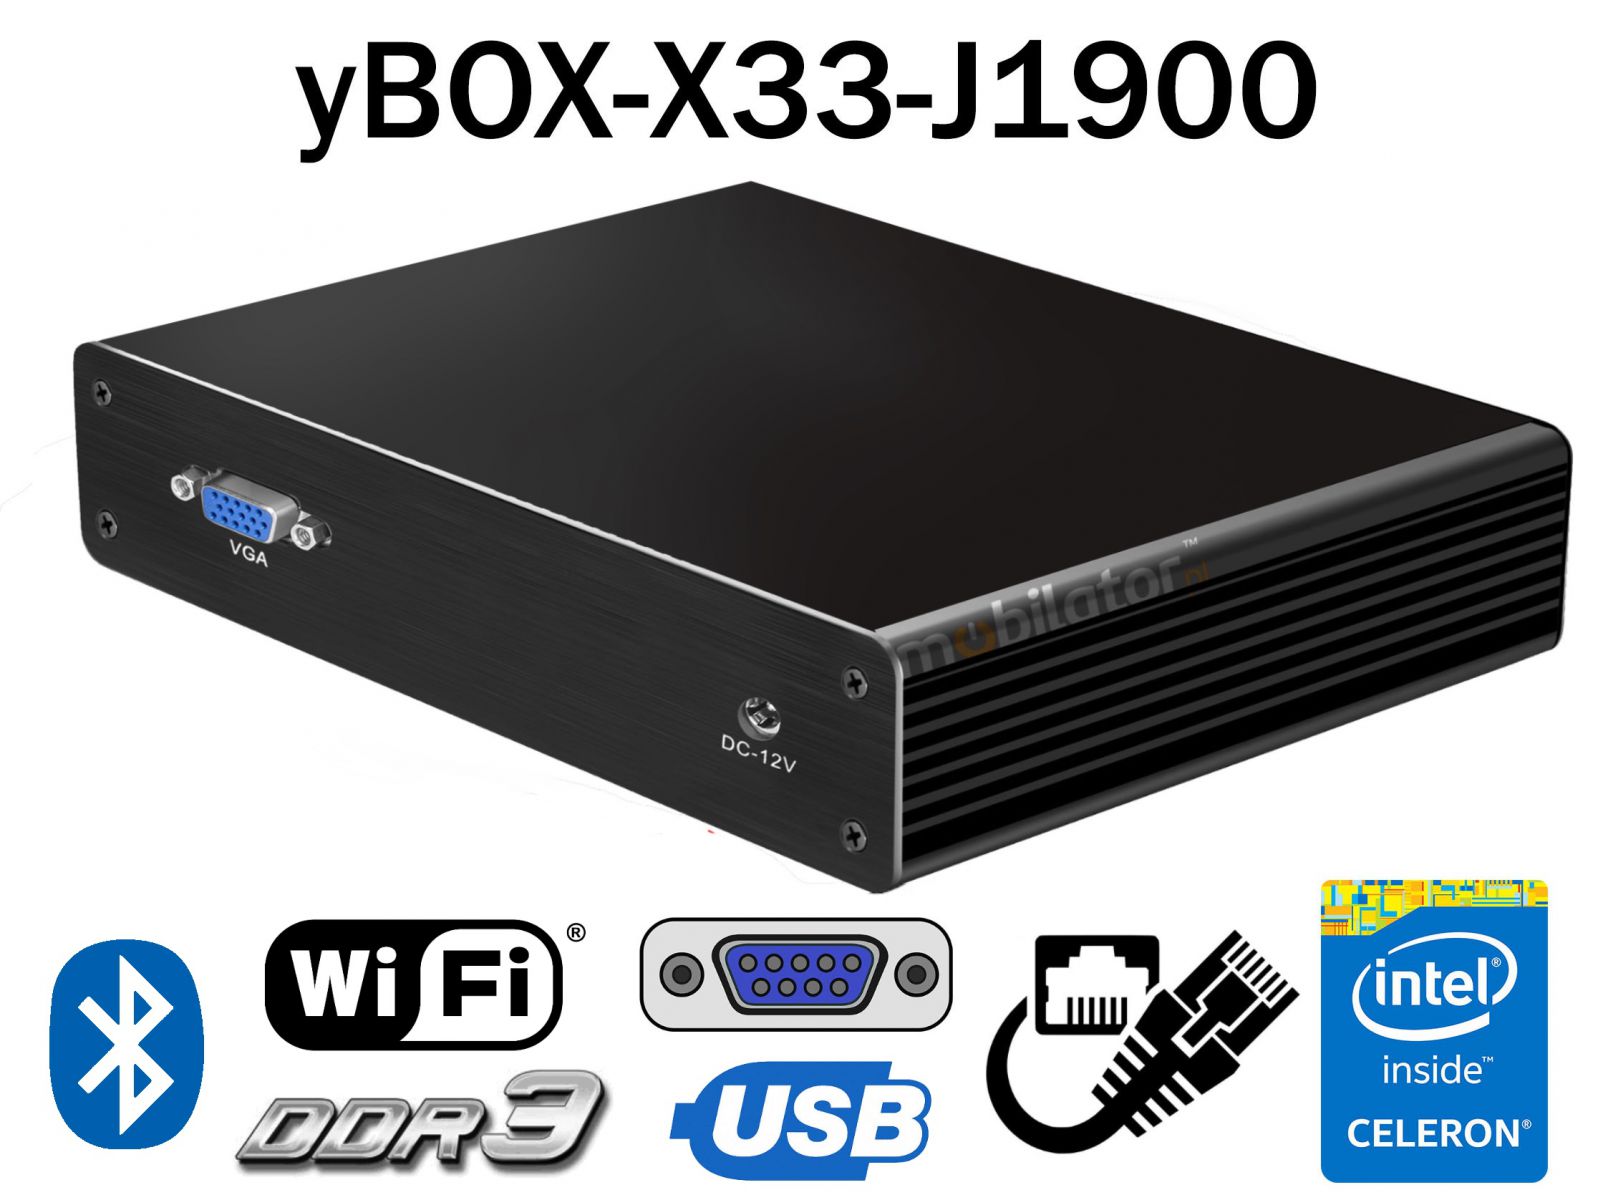 Powerful industrial computer for office and work 6XLAN, 1TB SSD, WiFi, yBOX-X33-(6xLAN)-J1900 v. 5